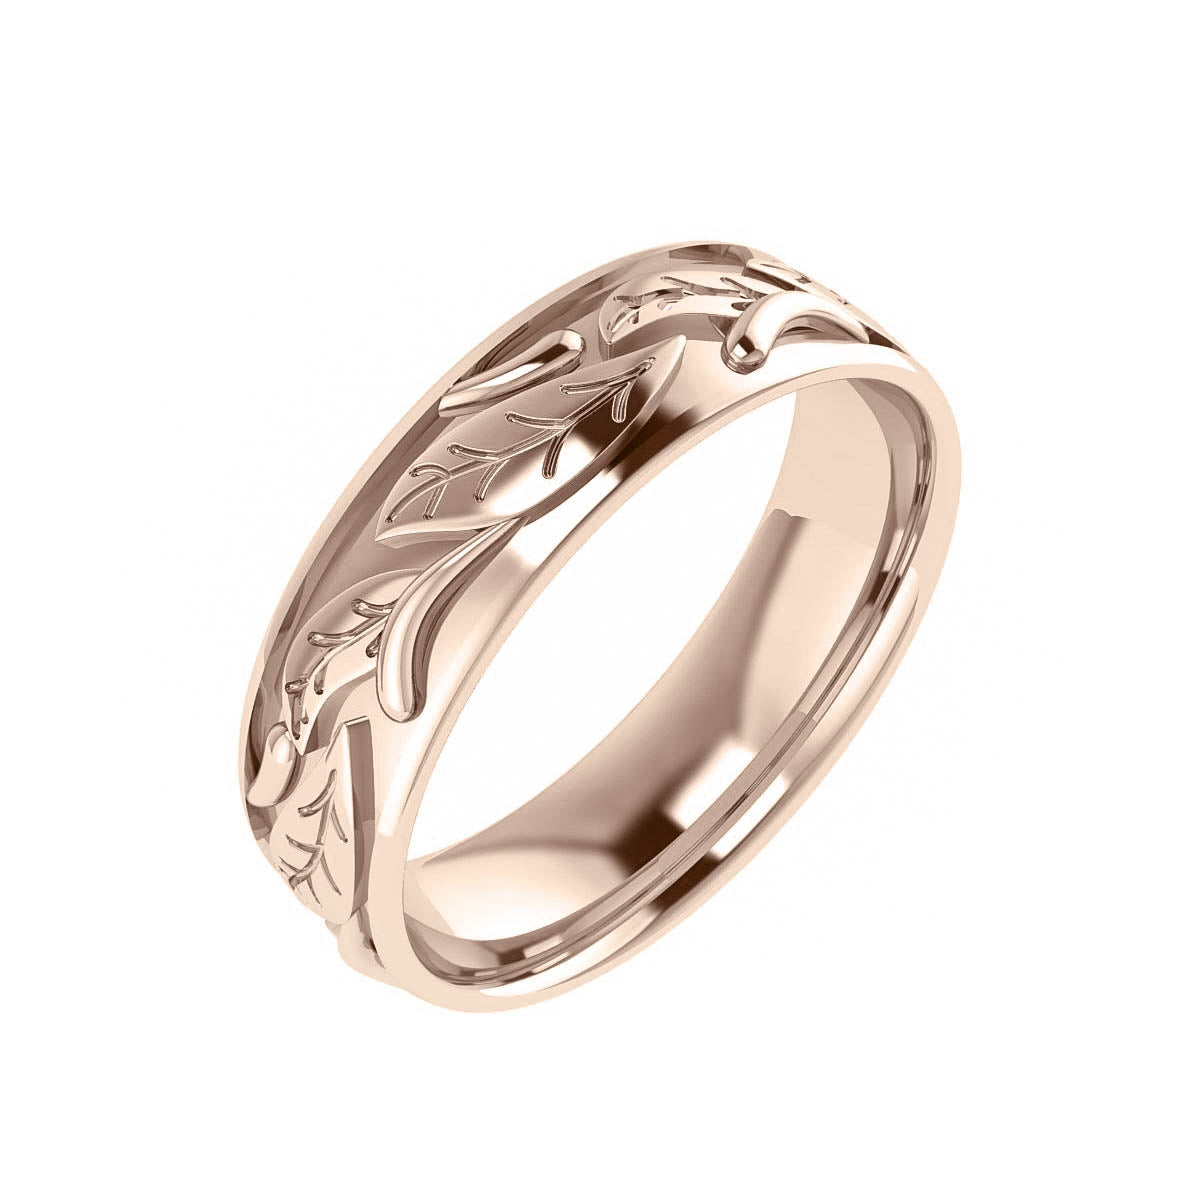 Man wedding band, matching leaf ring / Wisteria - Eden Garden Jewelry™